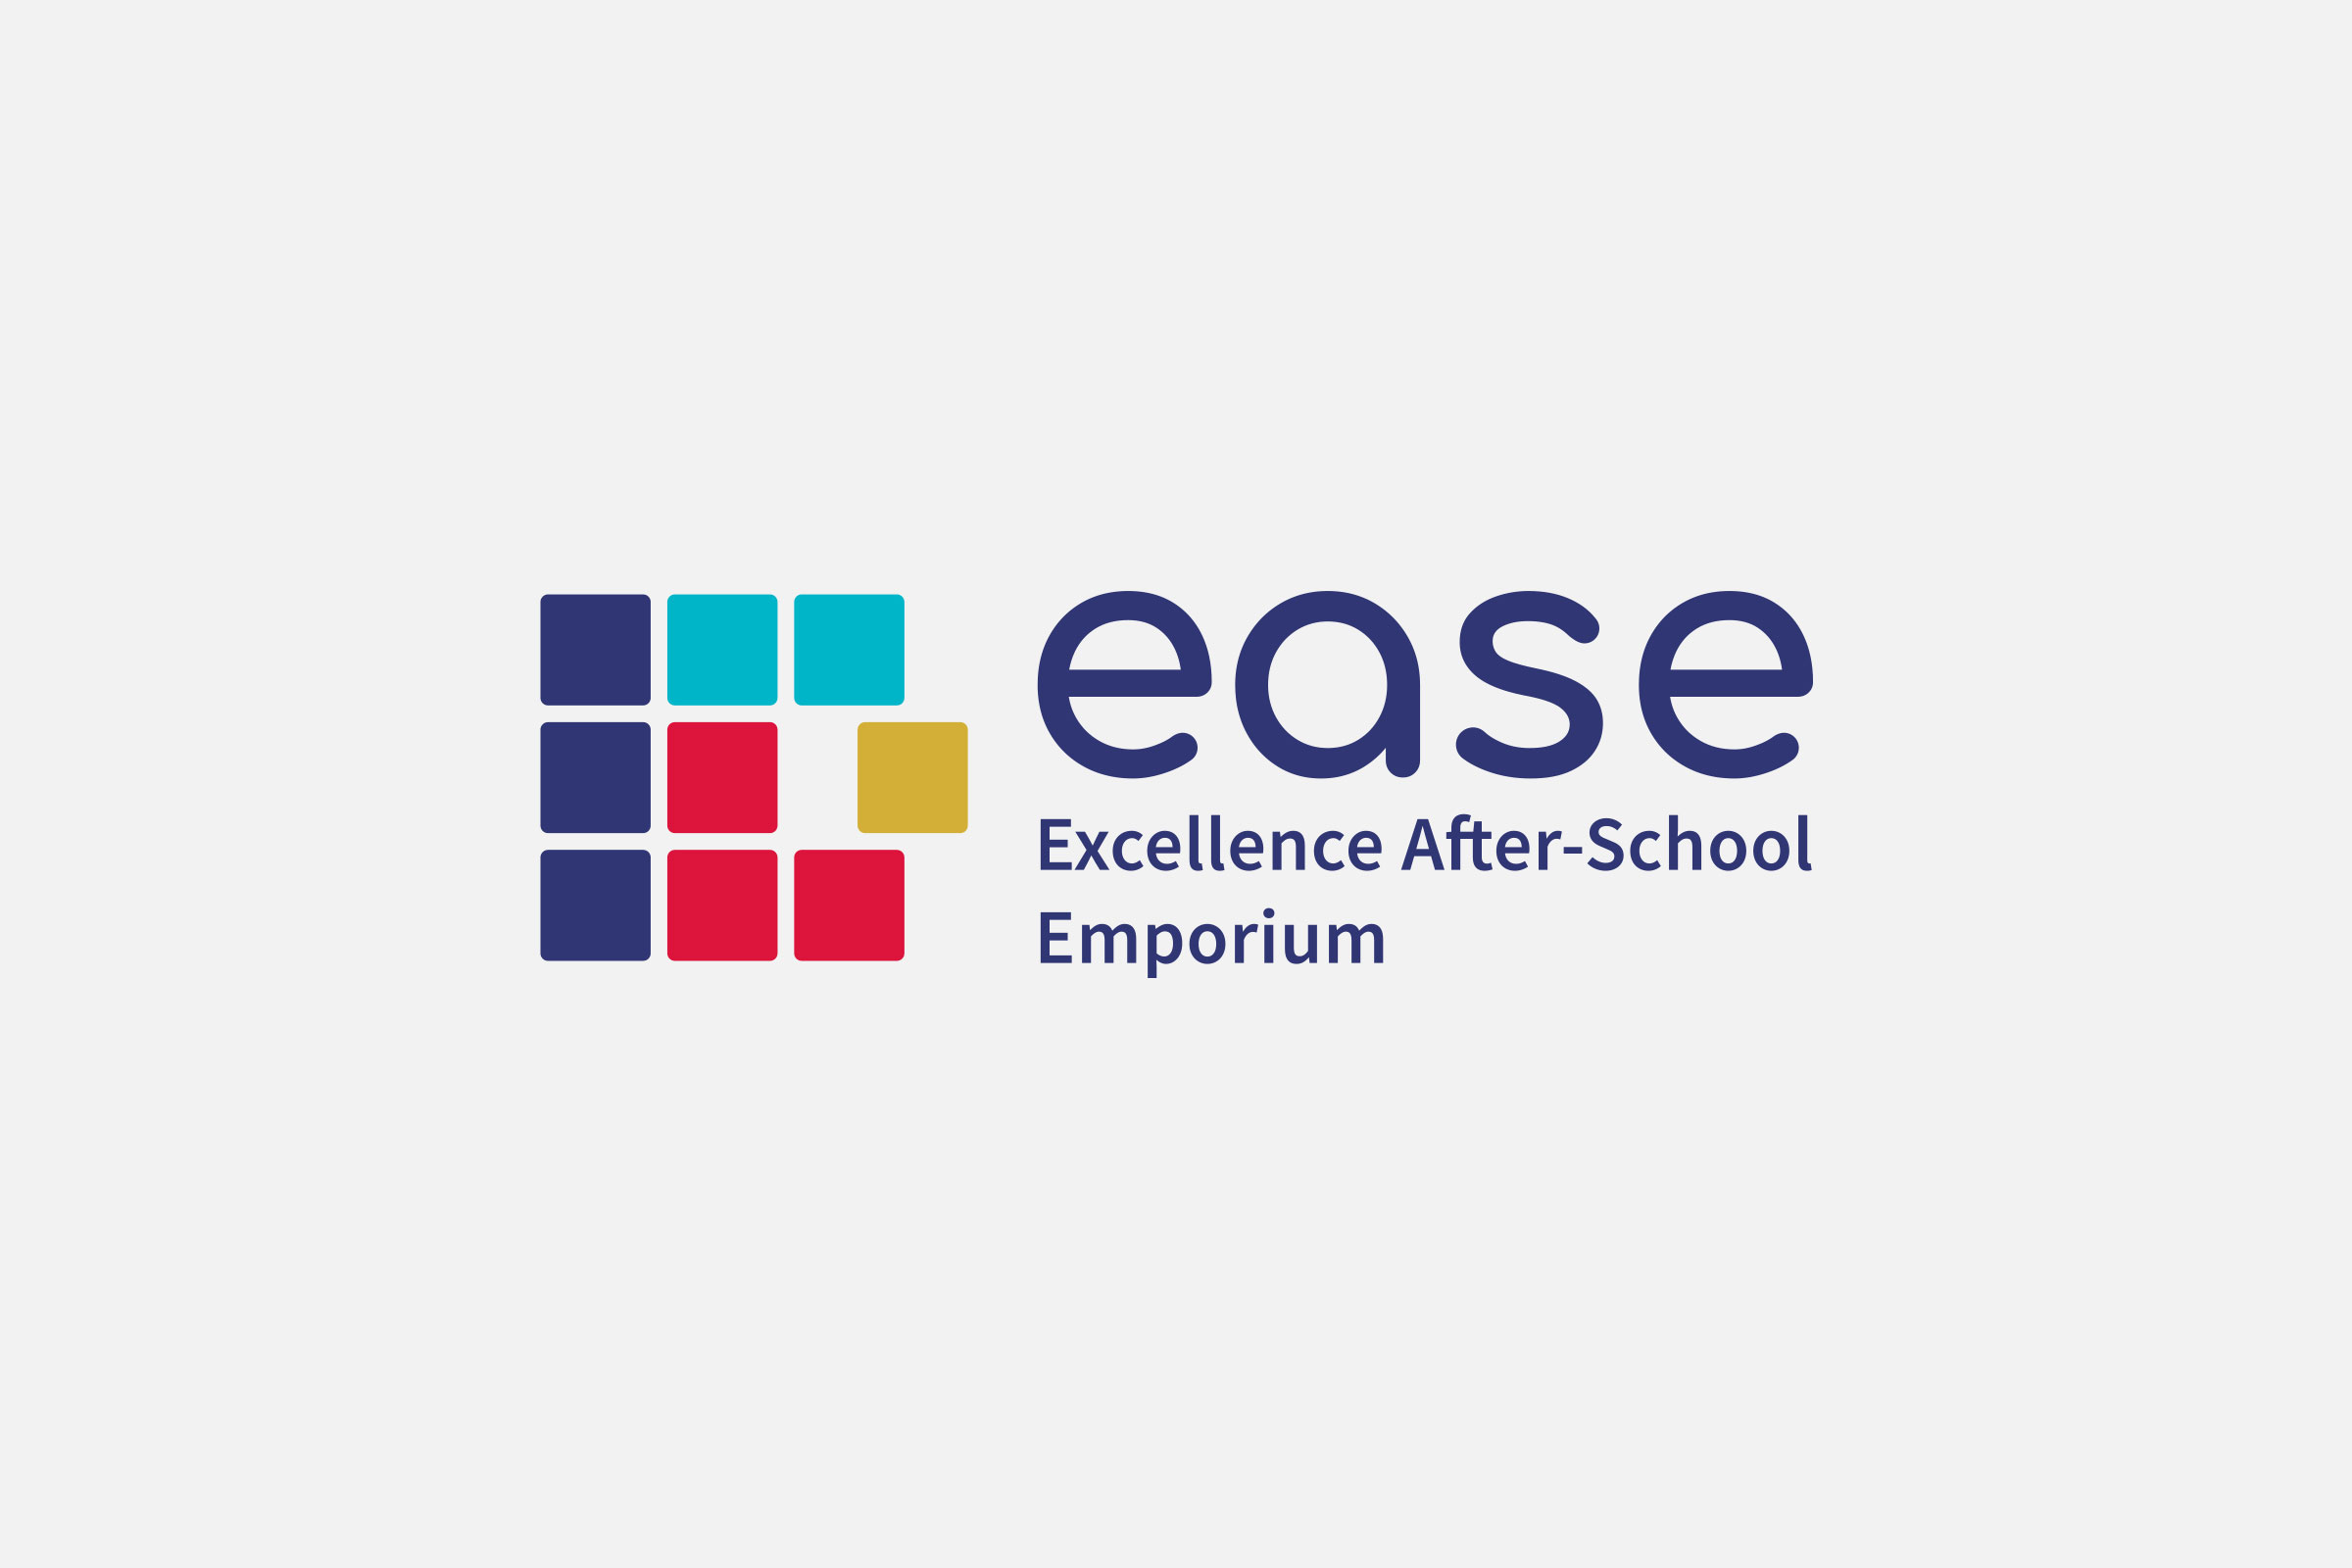 Excellence After School Emporium branding